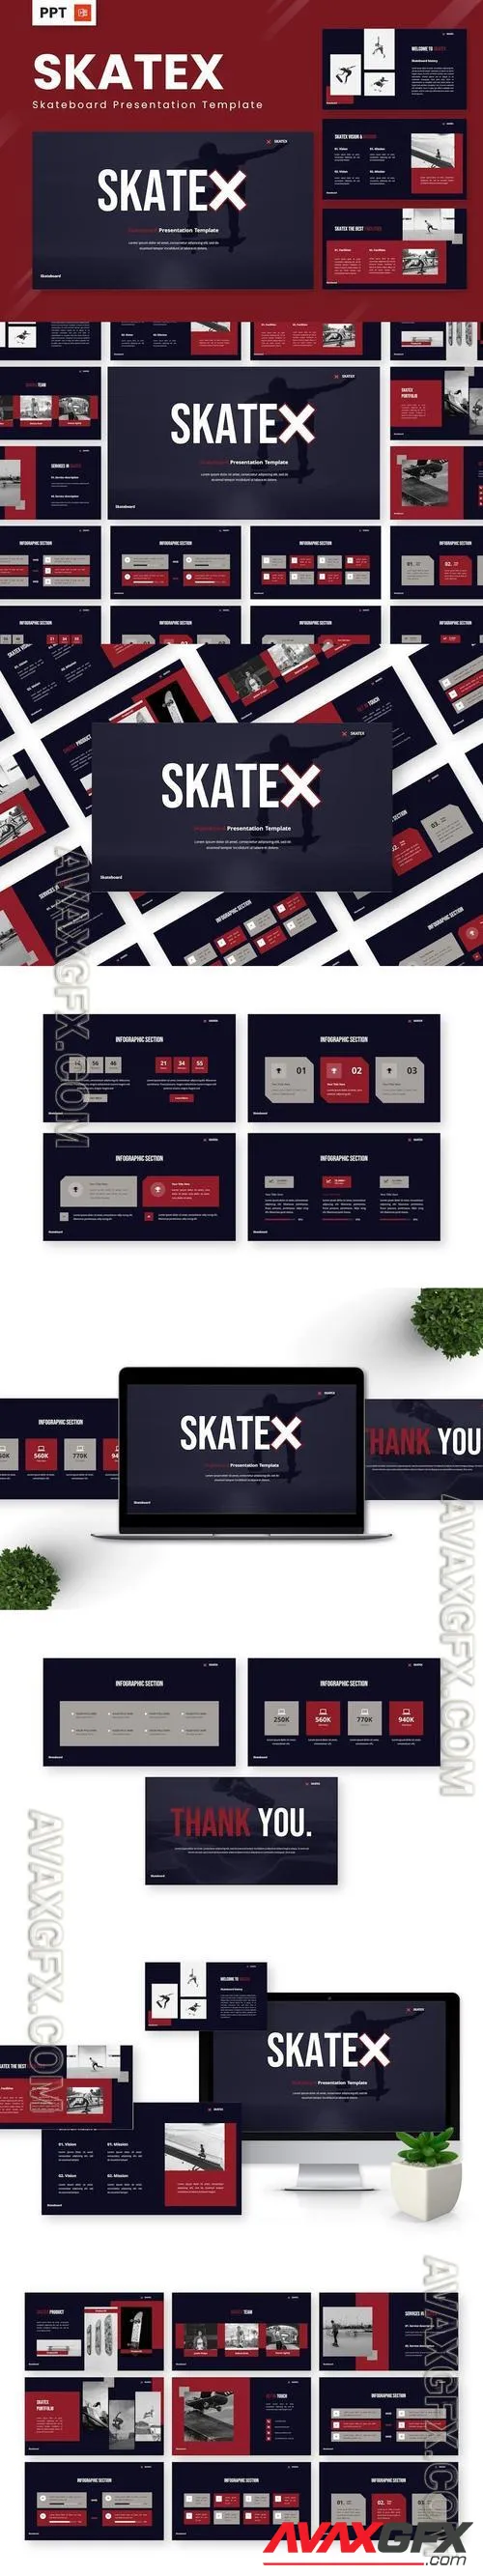 Skatex - Skateboard Powerpoint Templates